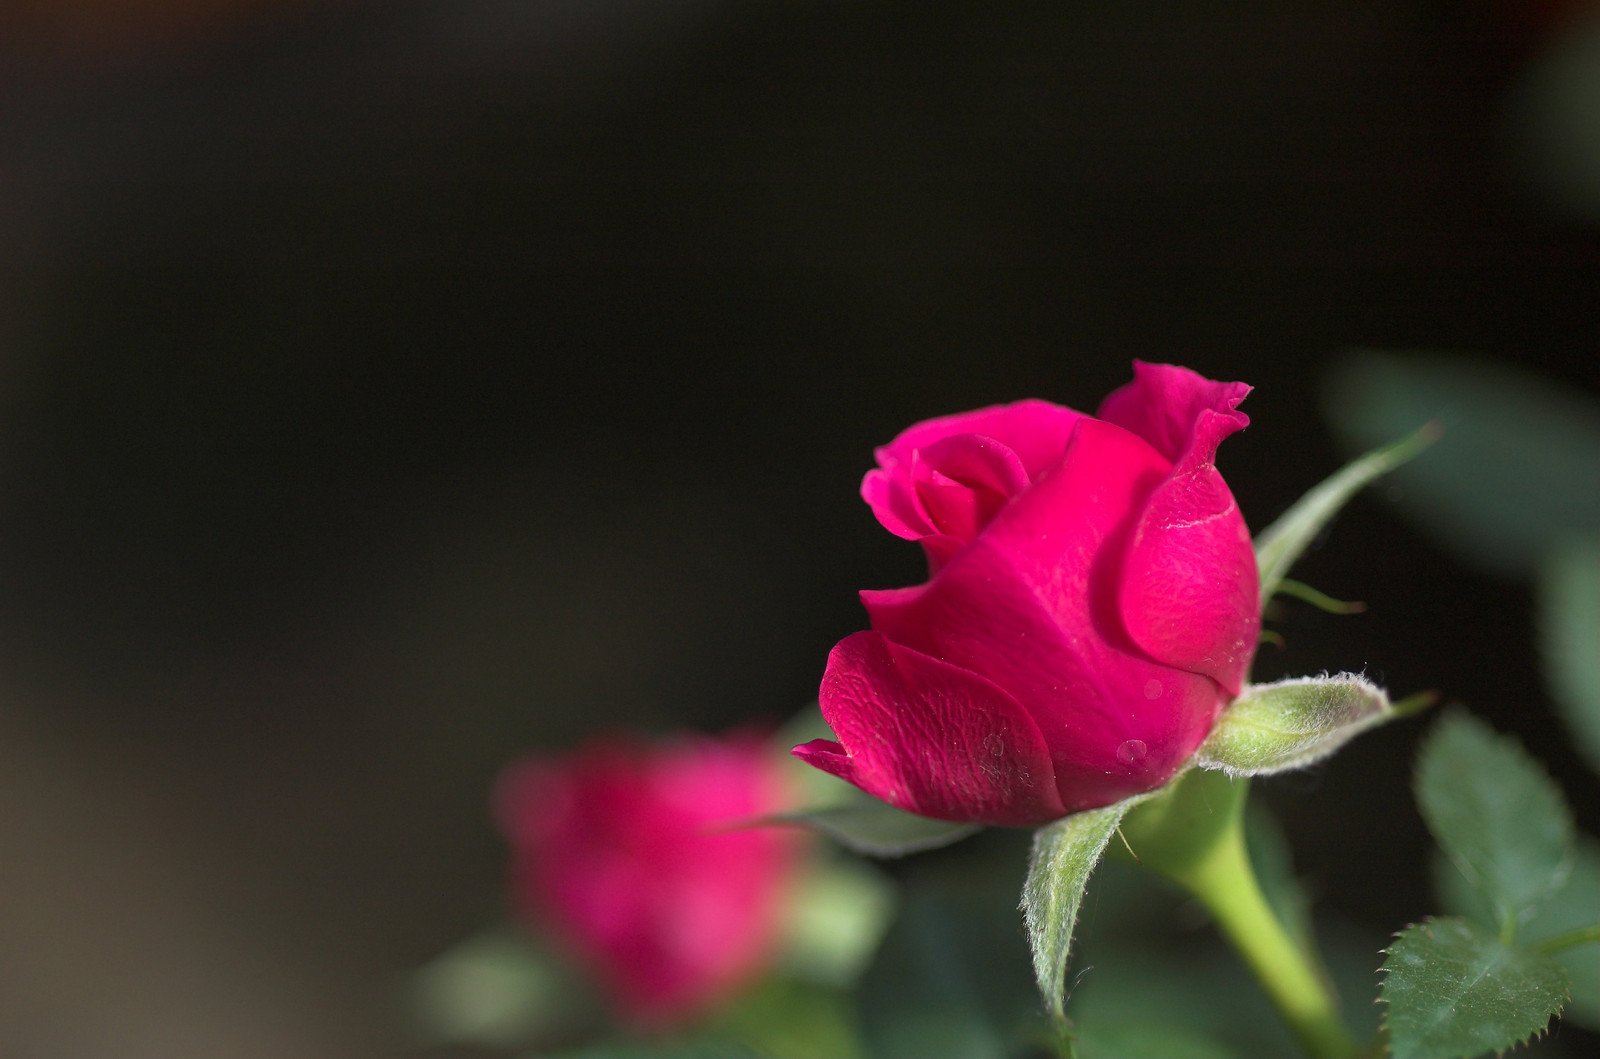 a closeup image of a pink rose bud